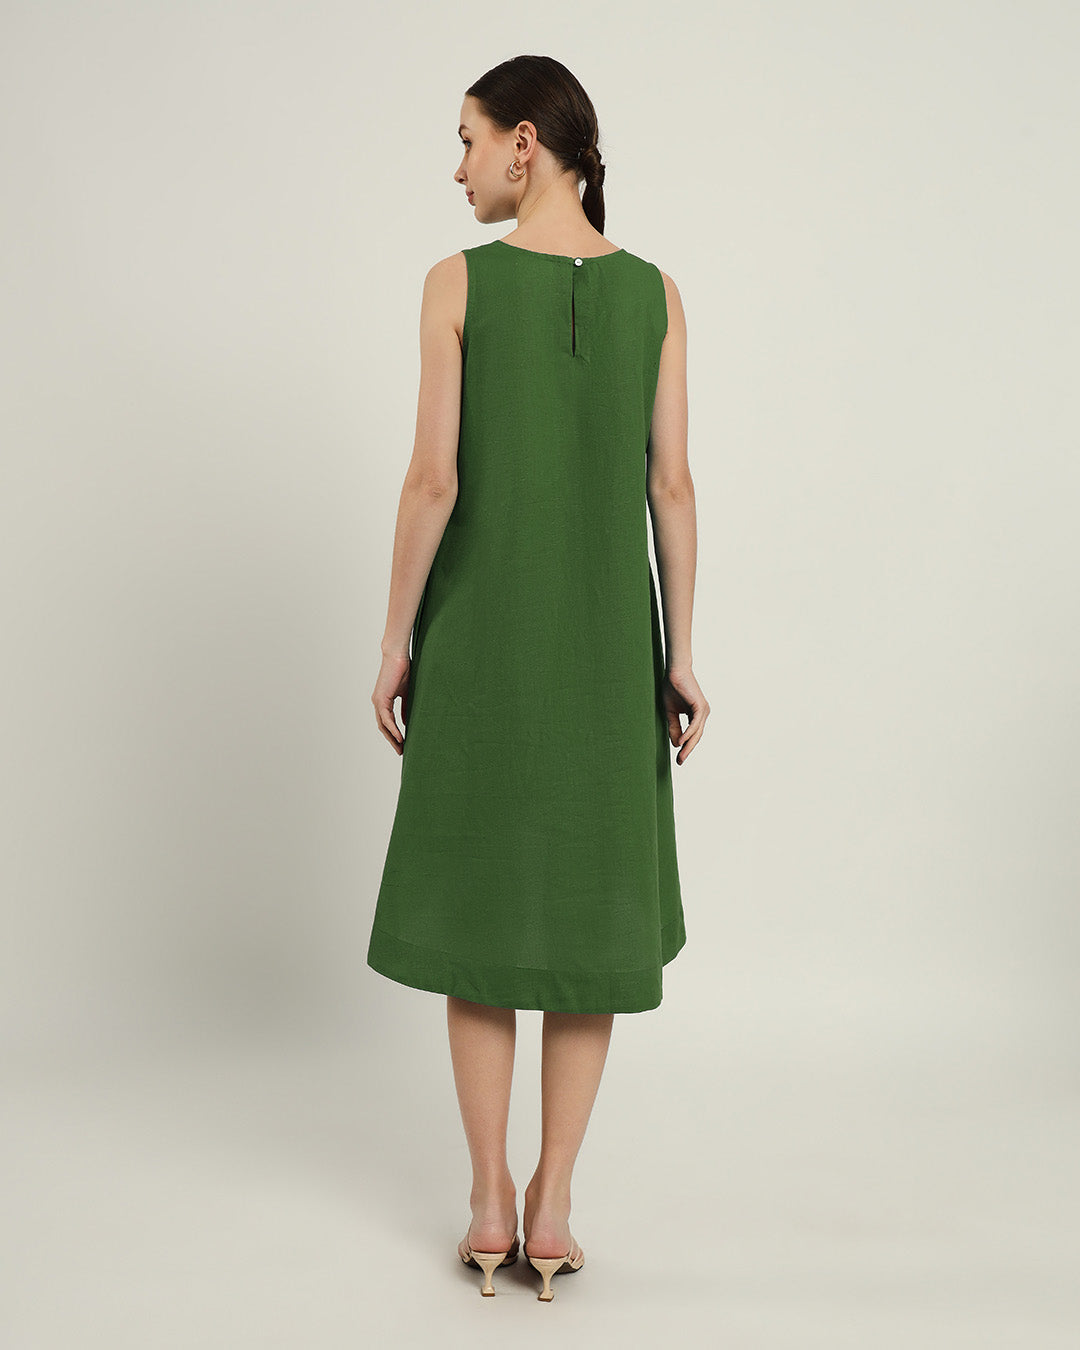 The Odesa Emerald Cotton Dress